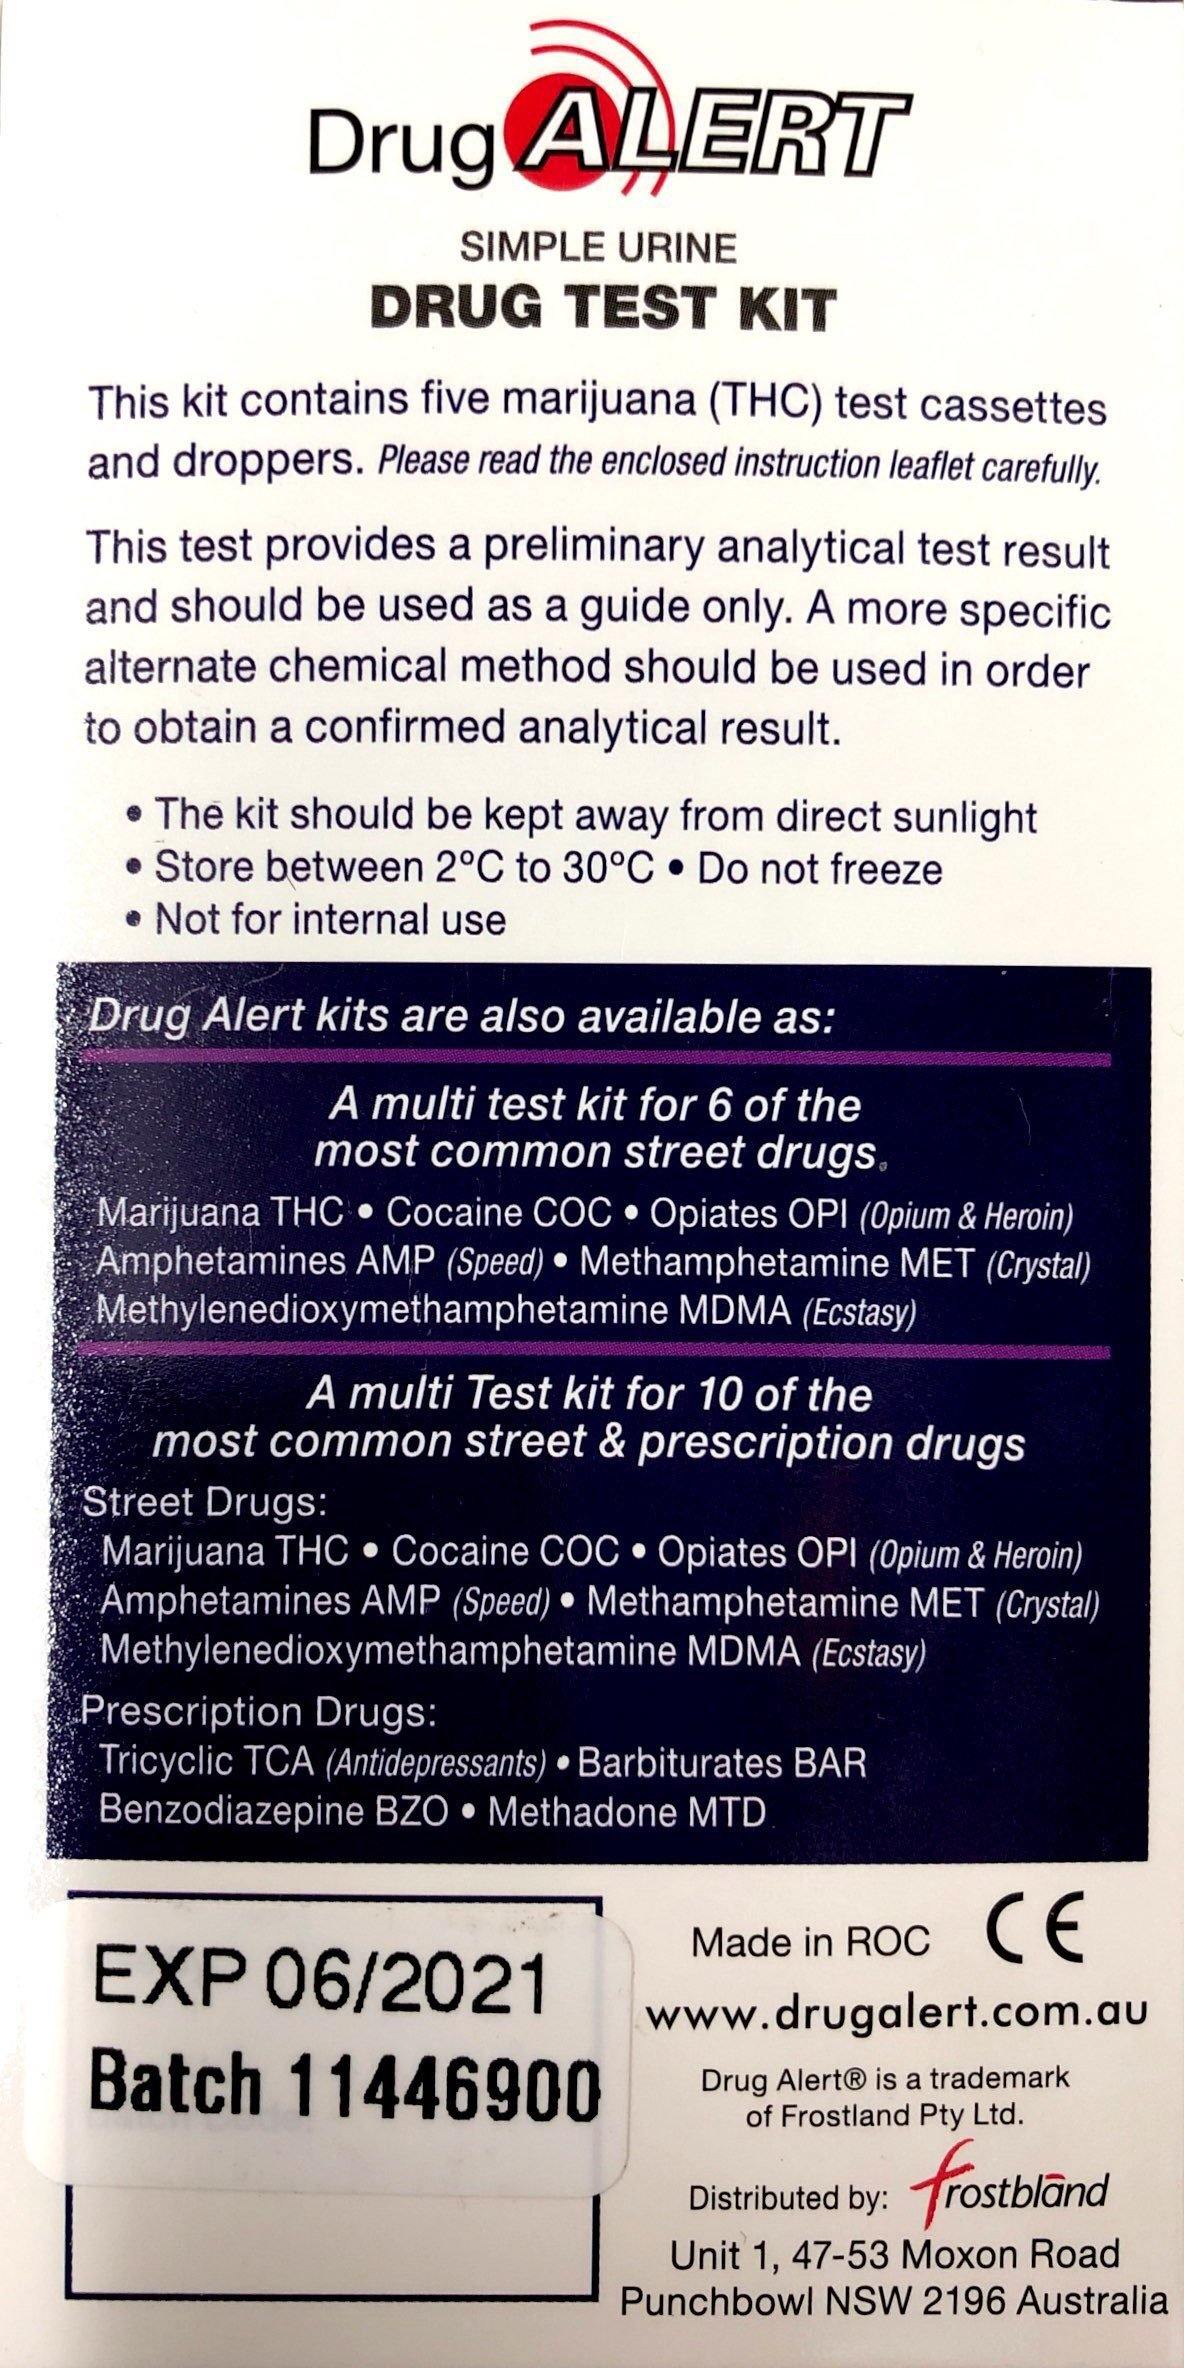 Drug Alert Urine 5 Test kit for Marijuana THC Tetrahydrocannabinol - DominionRoadPharmacy